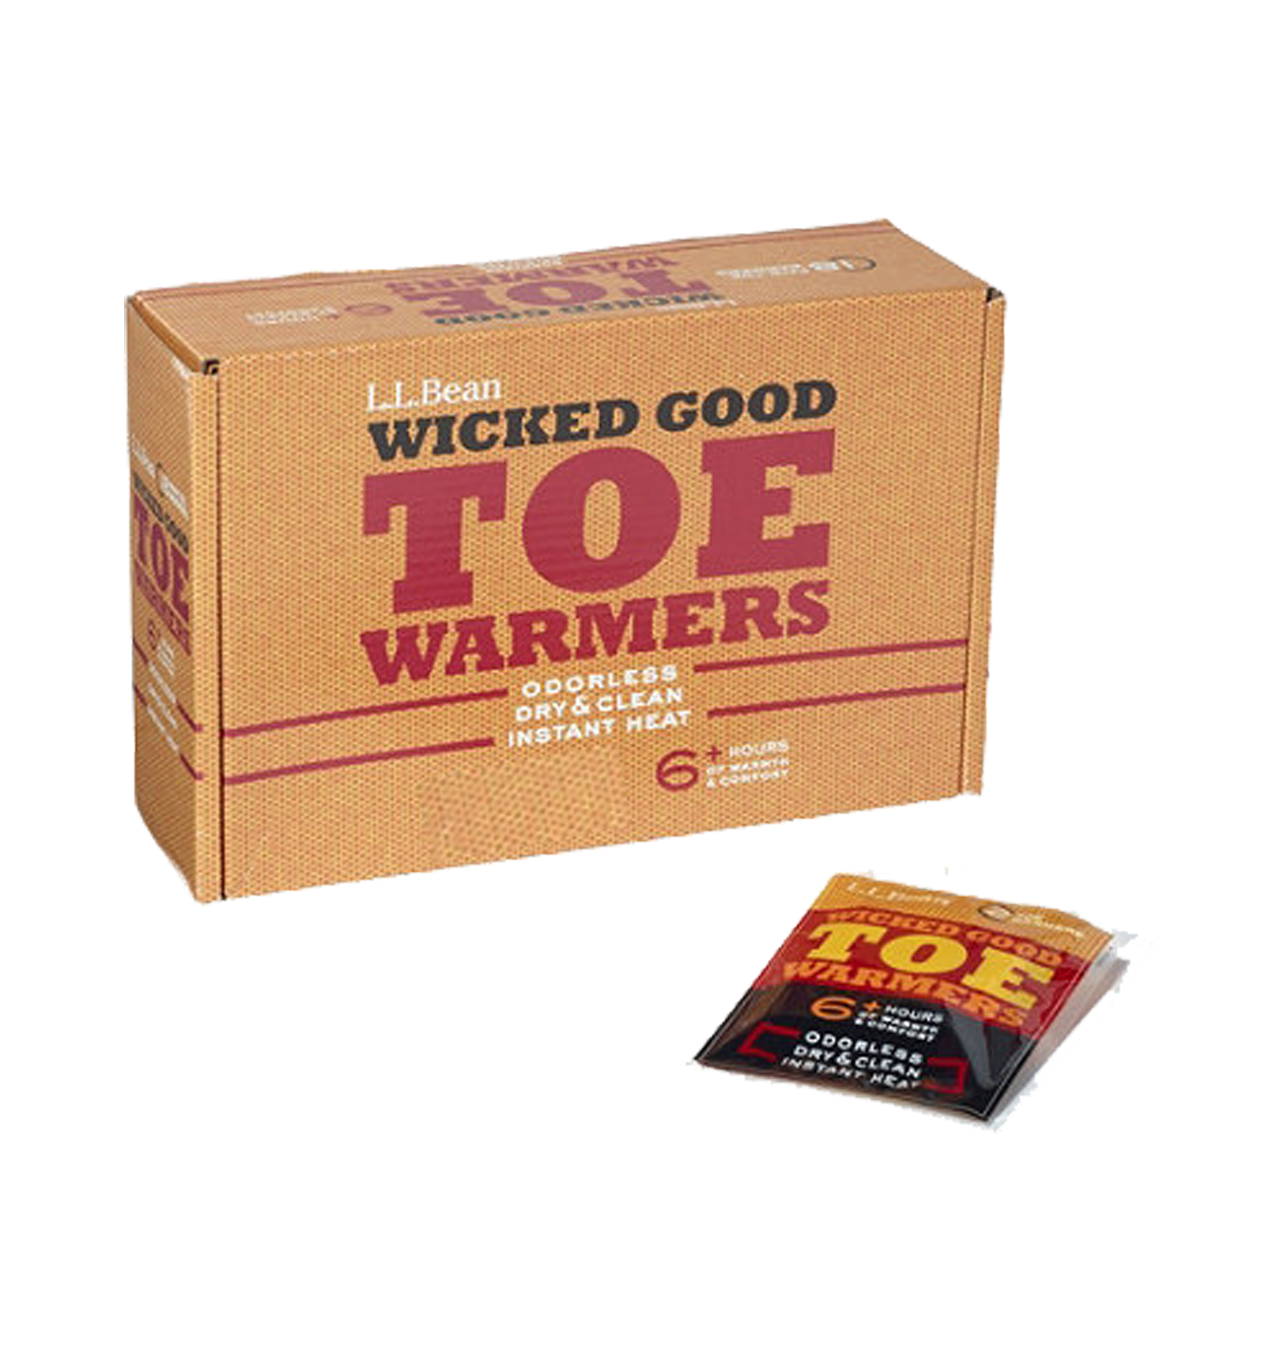 L.L. Bean - Wicked Good Toe Warmers (2-Pack)